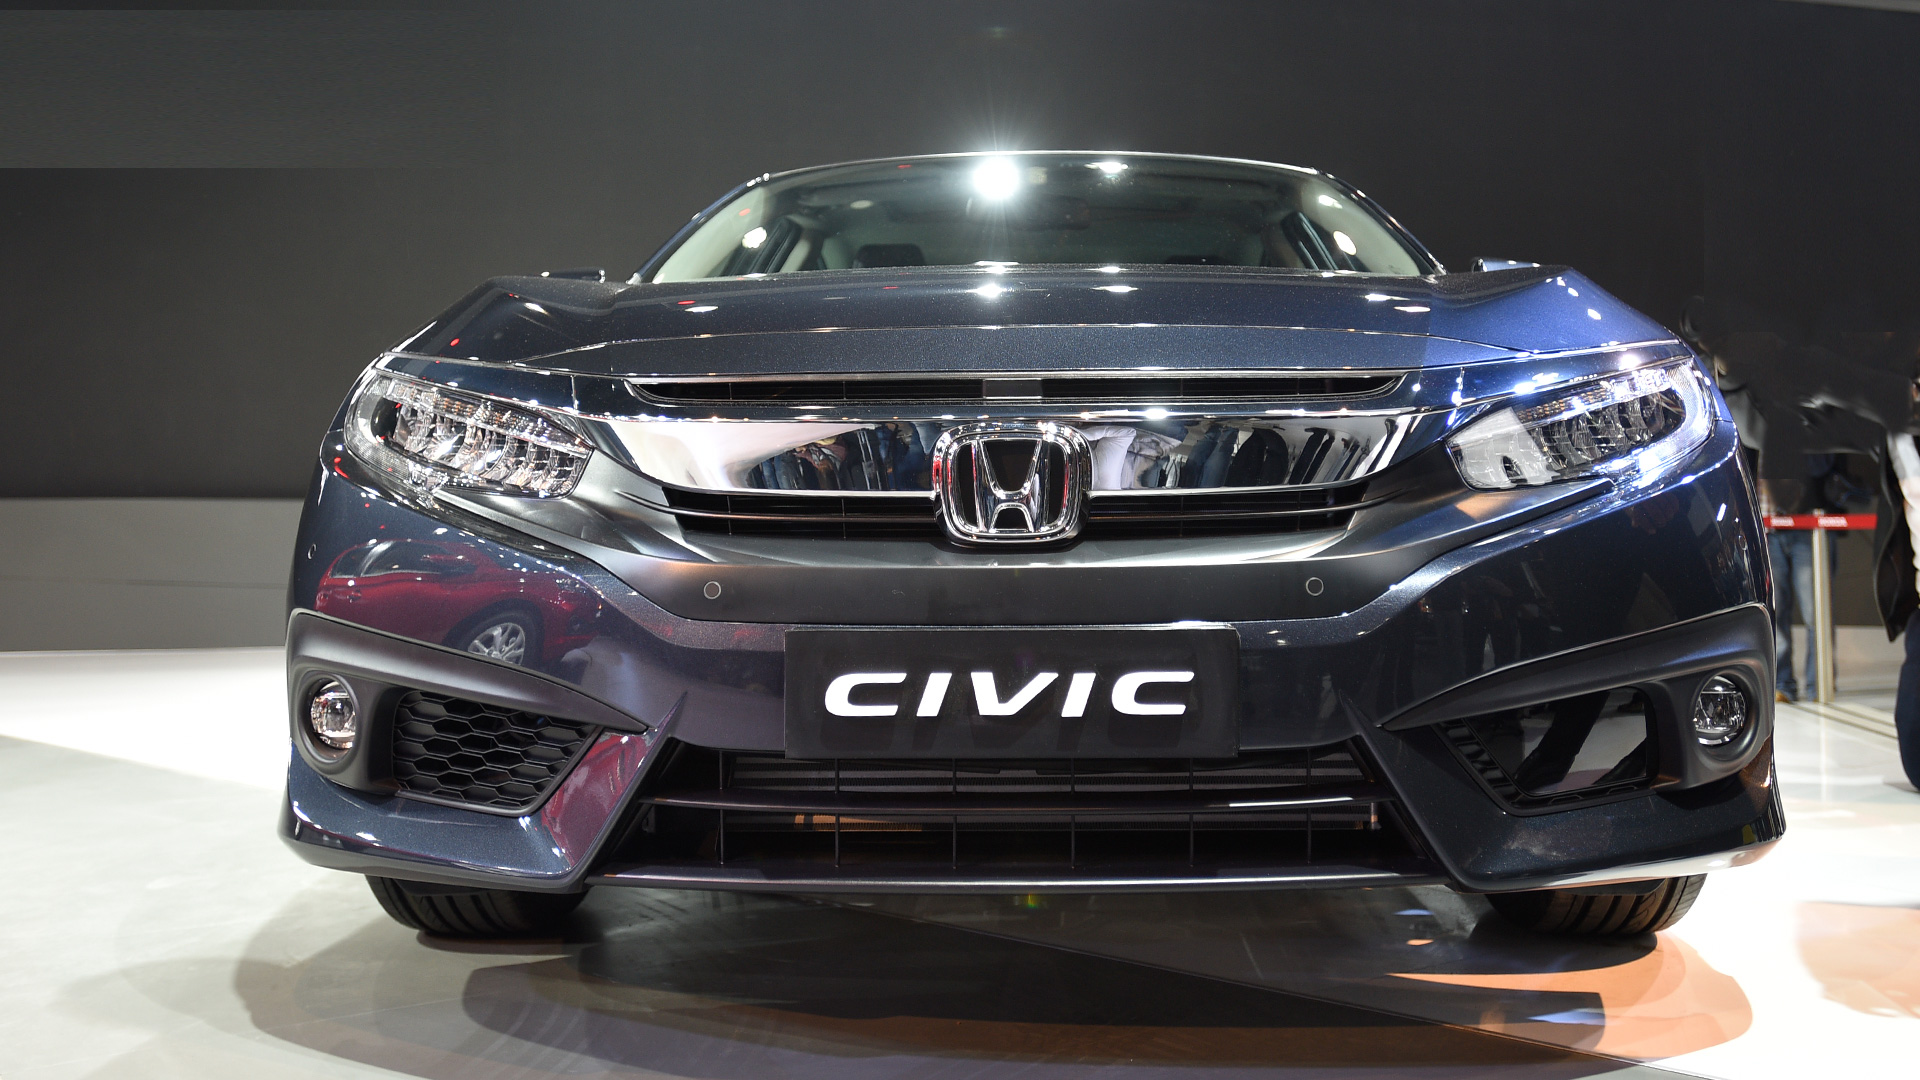 Honda Civic 2018 STD Exterior